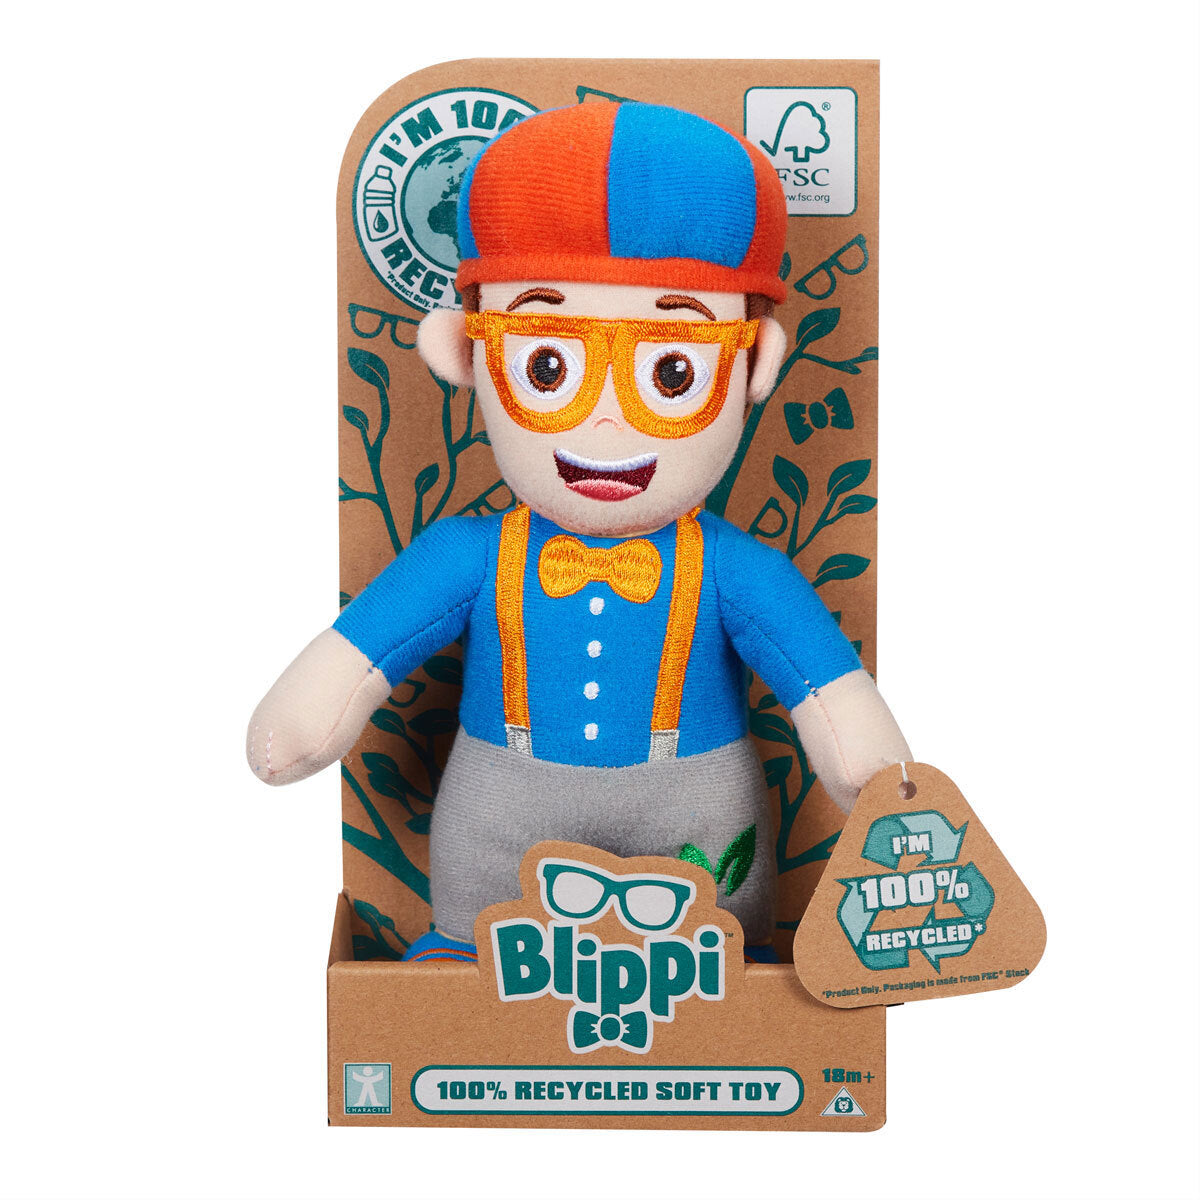 Blippi Eco 100% Recycled Materials Soft Plush Toy